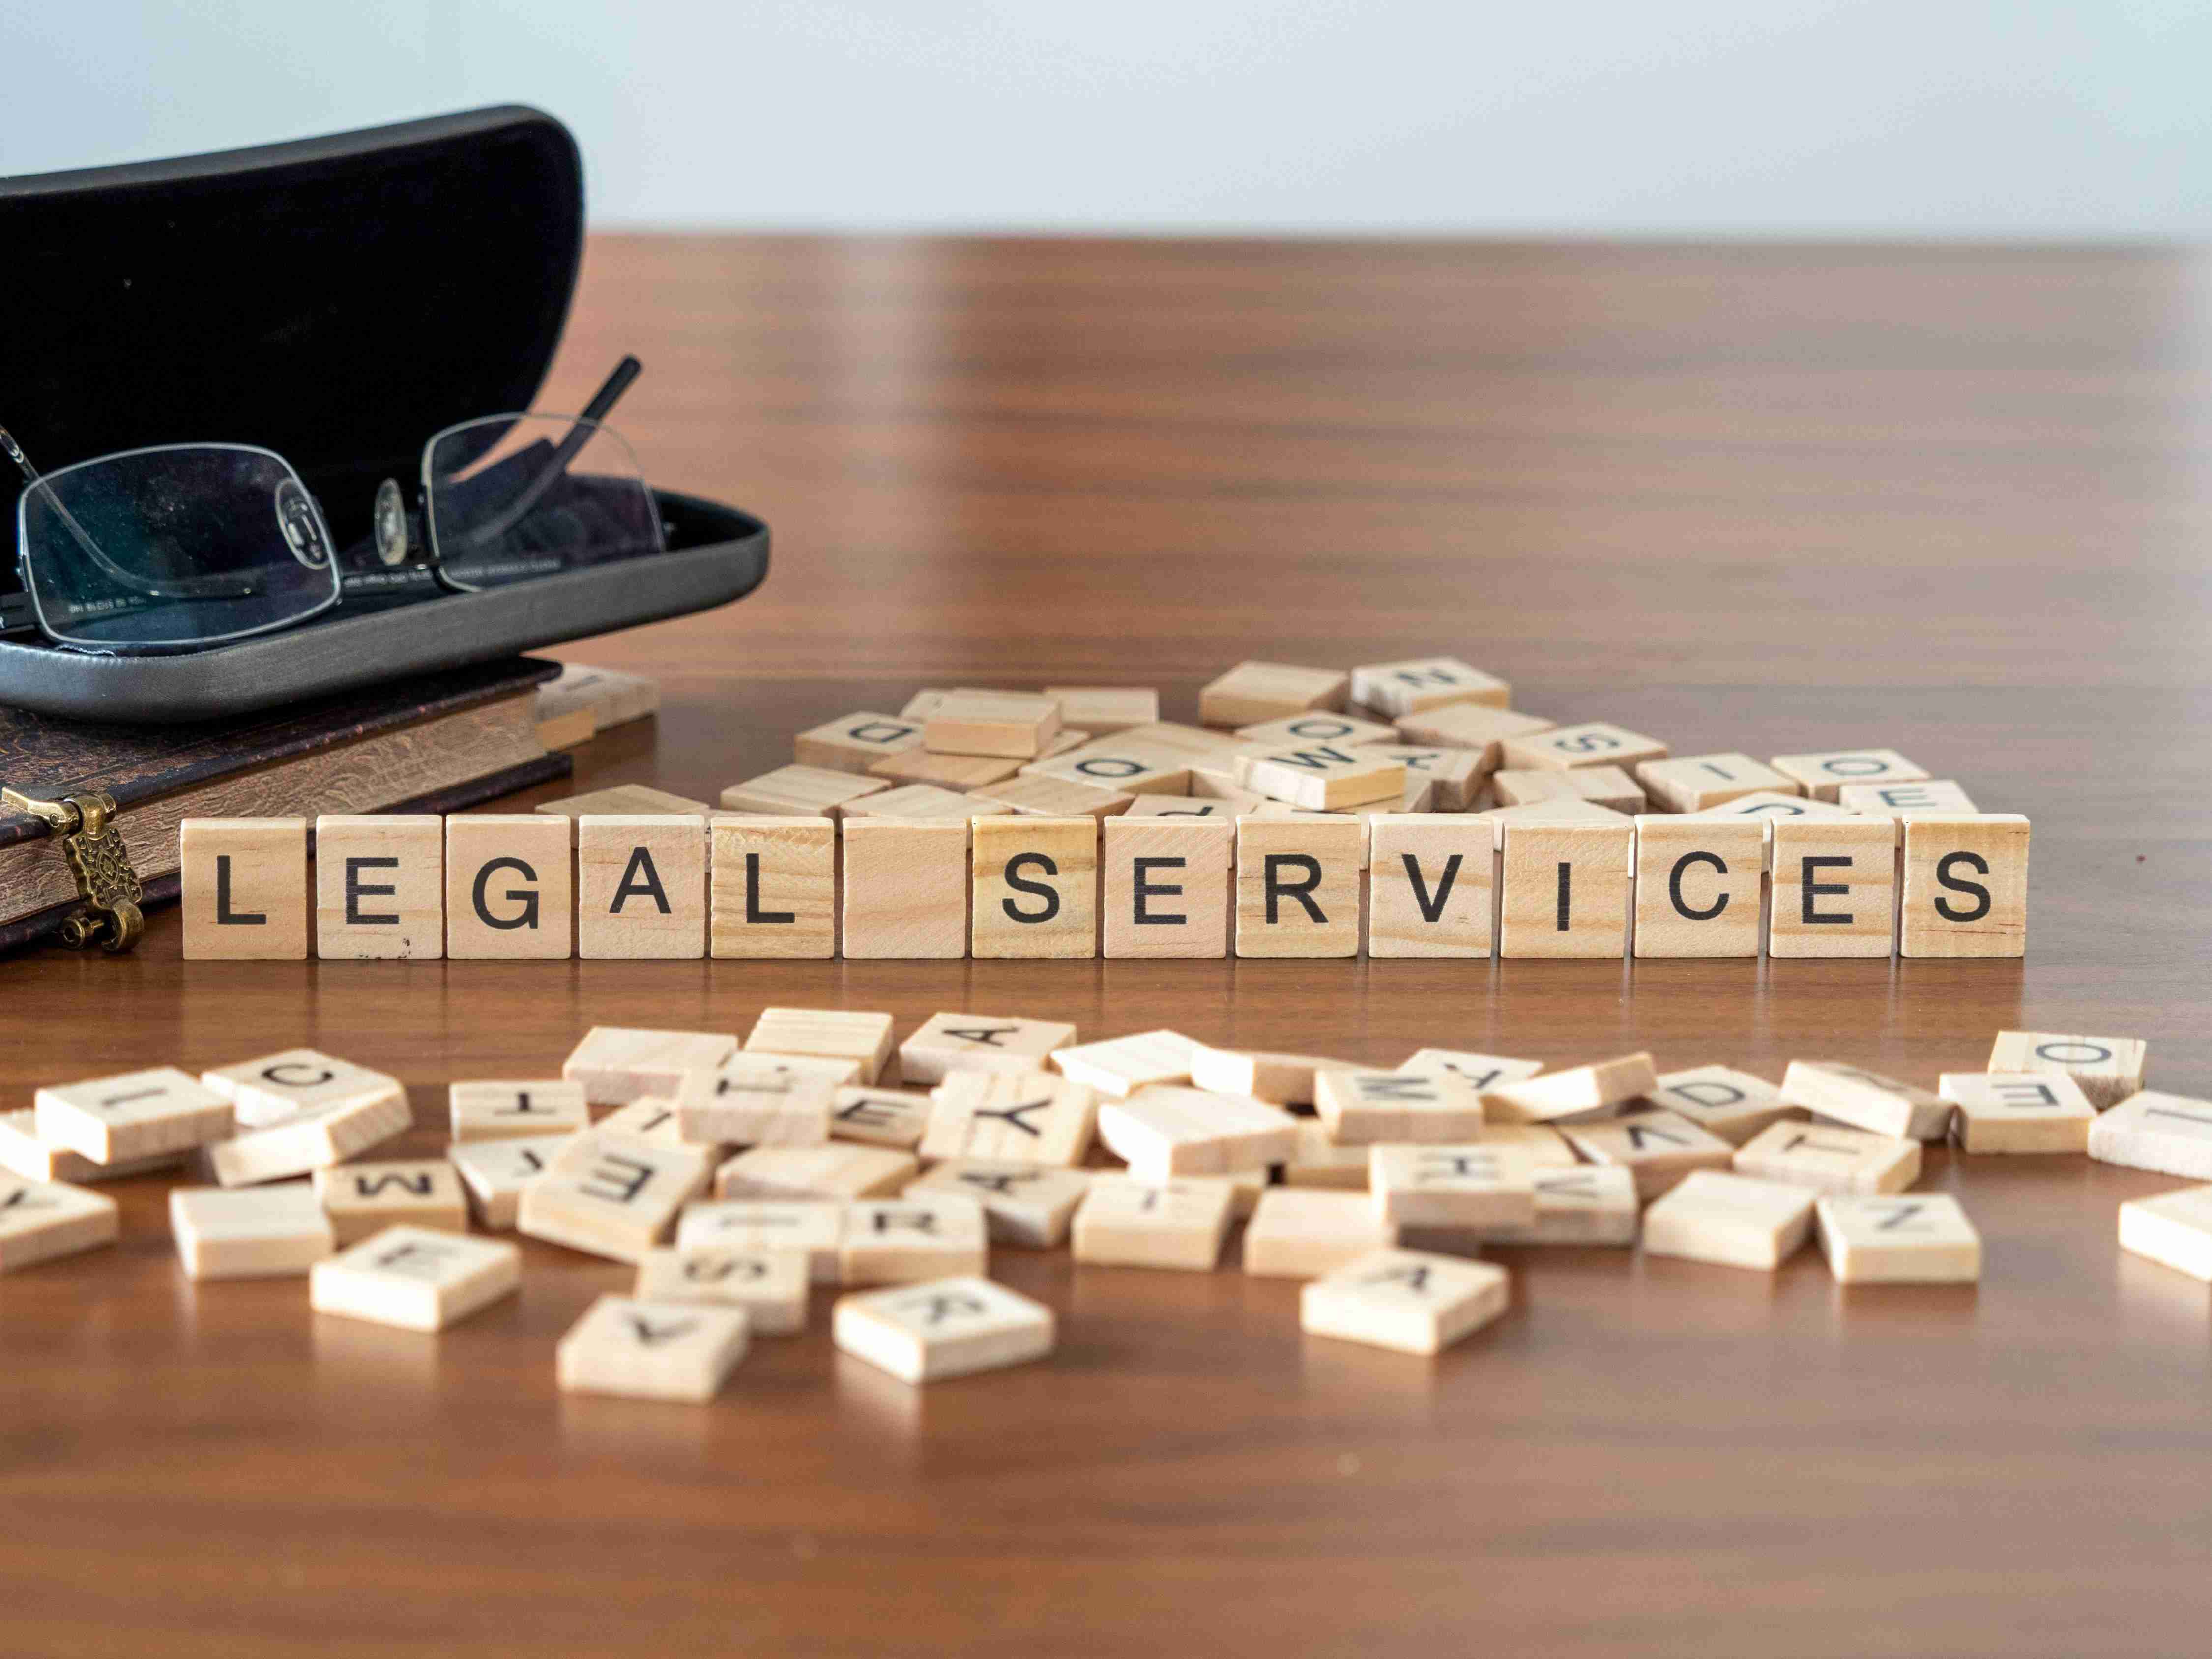 alsp, alternative legal service providers, servicios legales alternativos